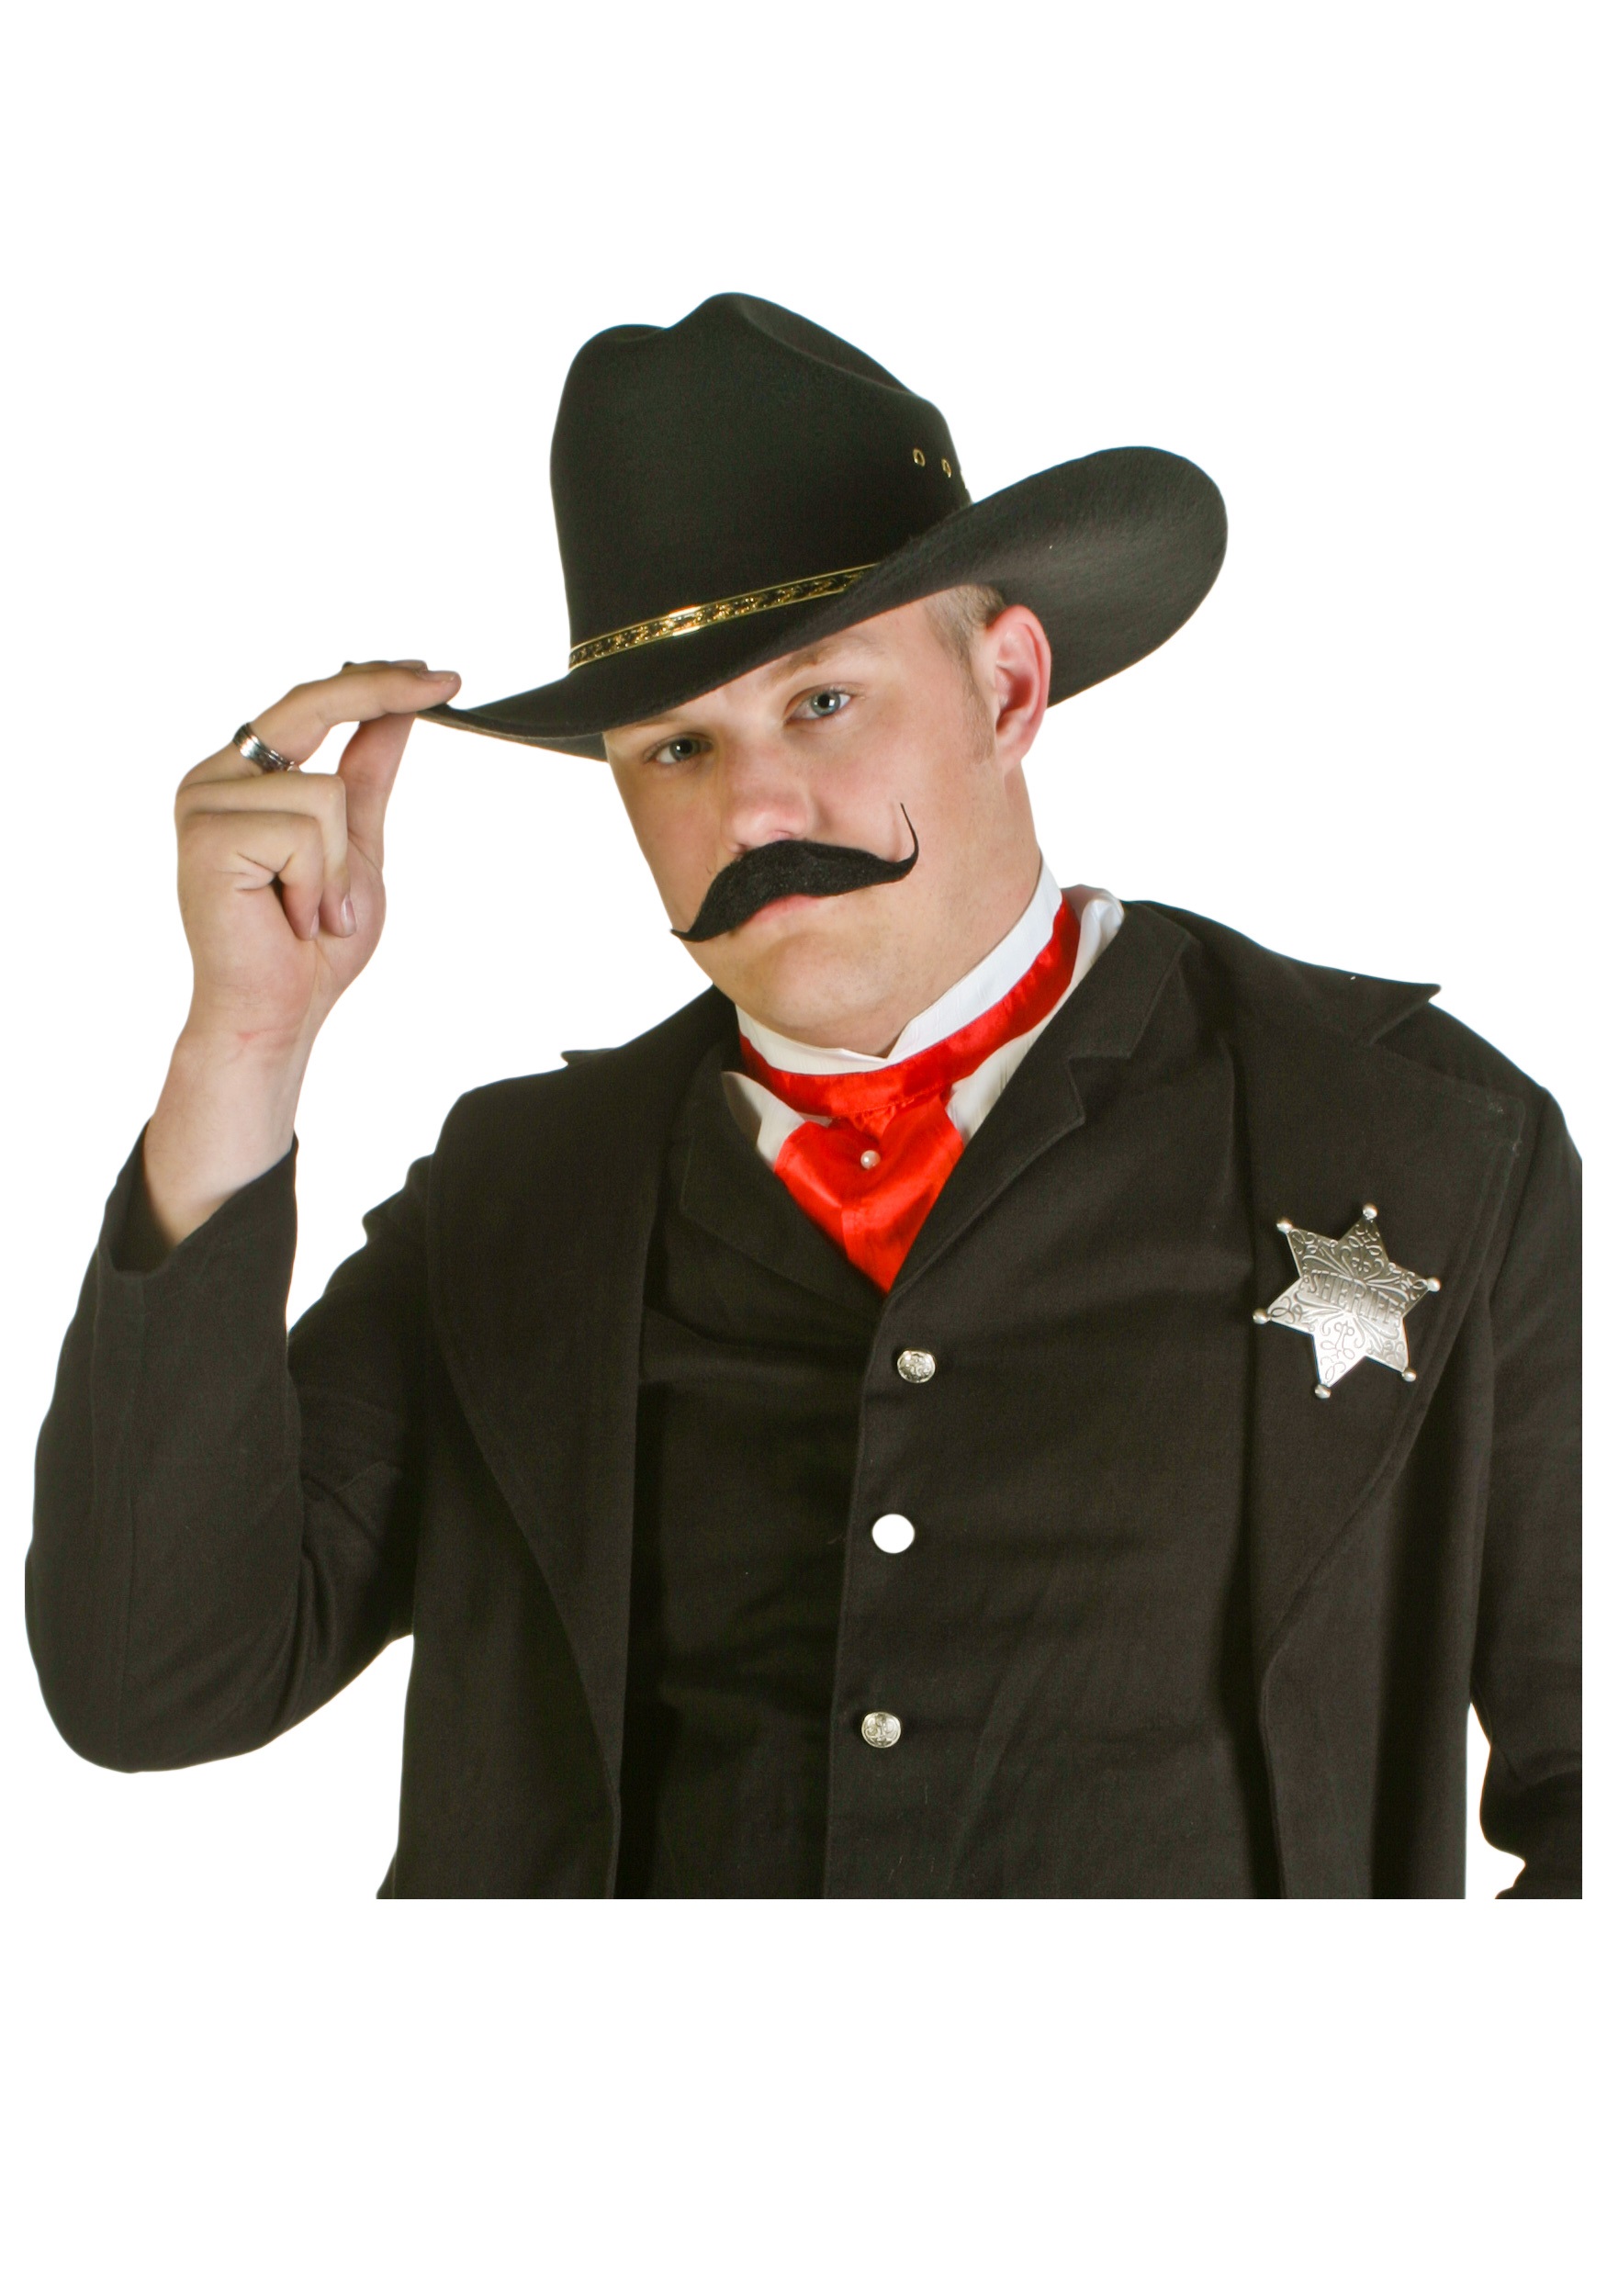 Cowboy Mustache Accessory